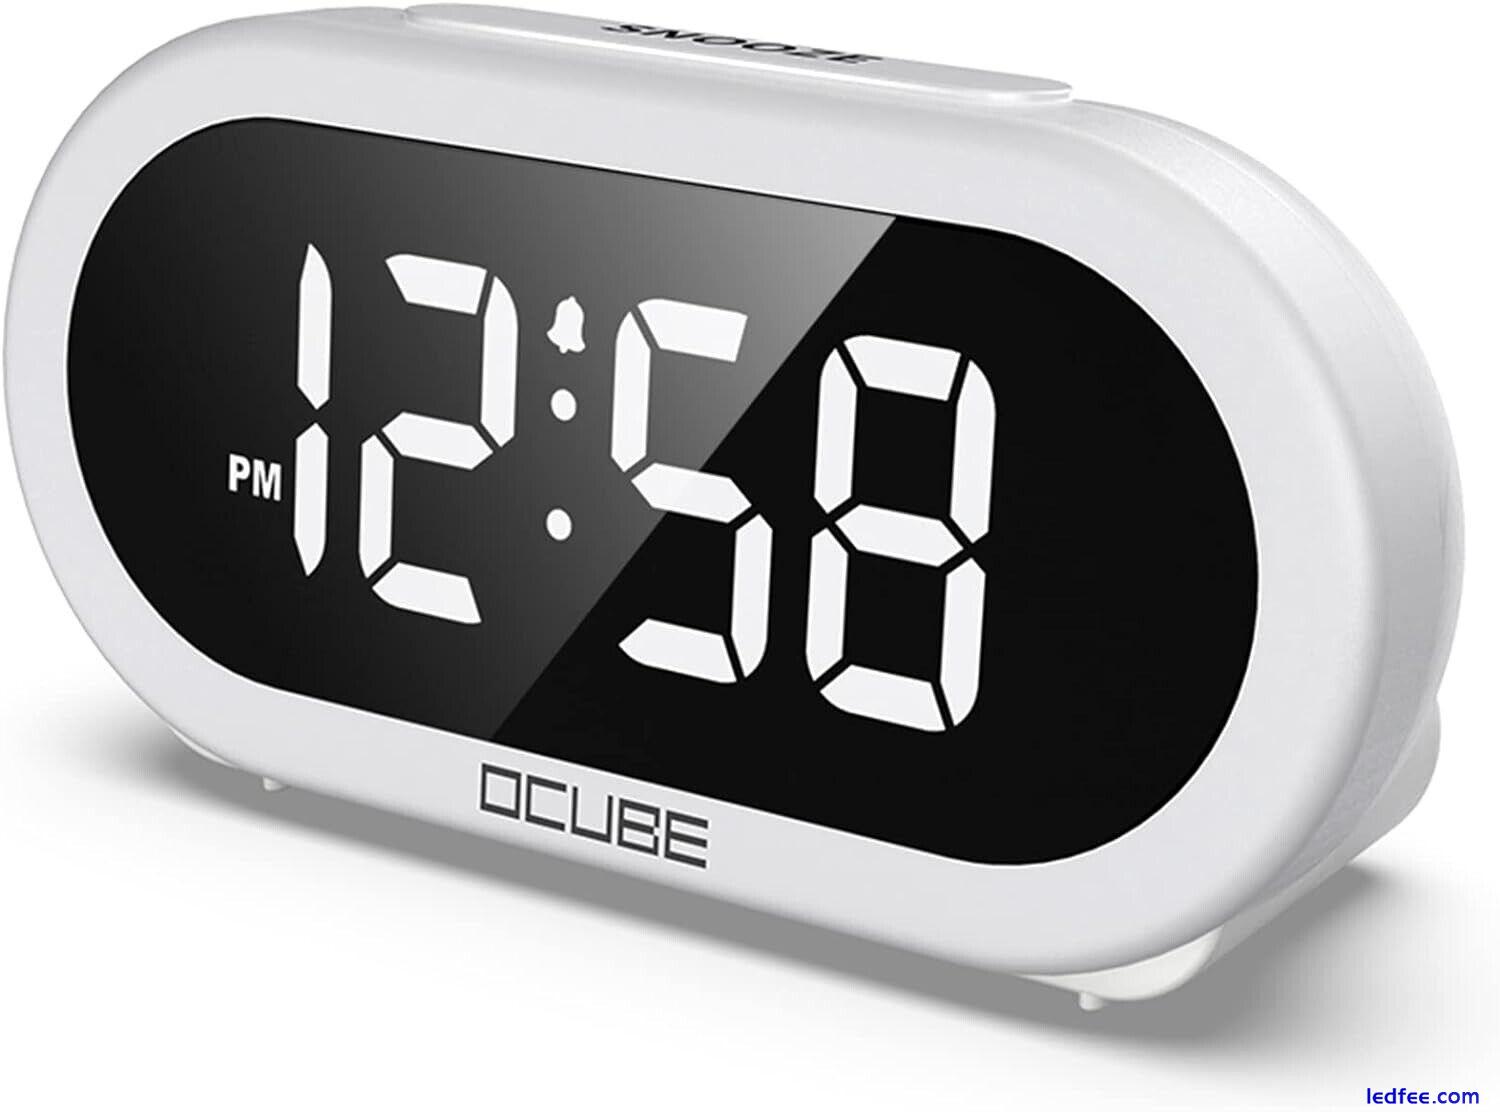 OCUBE LED Digital Alarm Clock with 5 Optional Alarm Sounds - White 0 